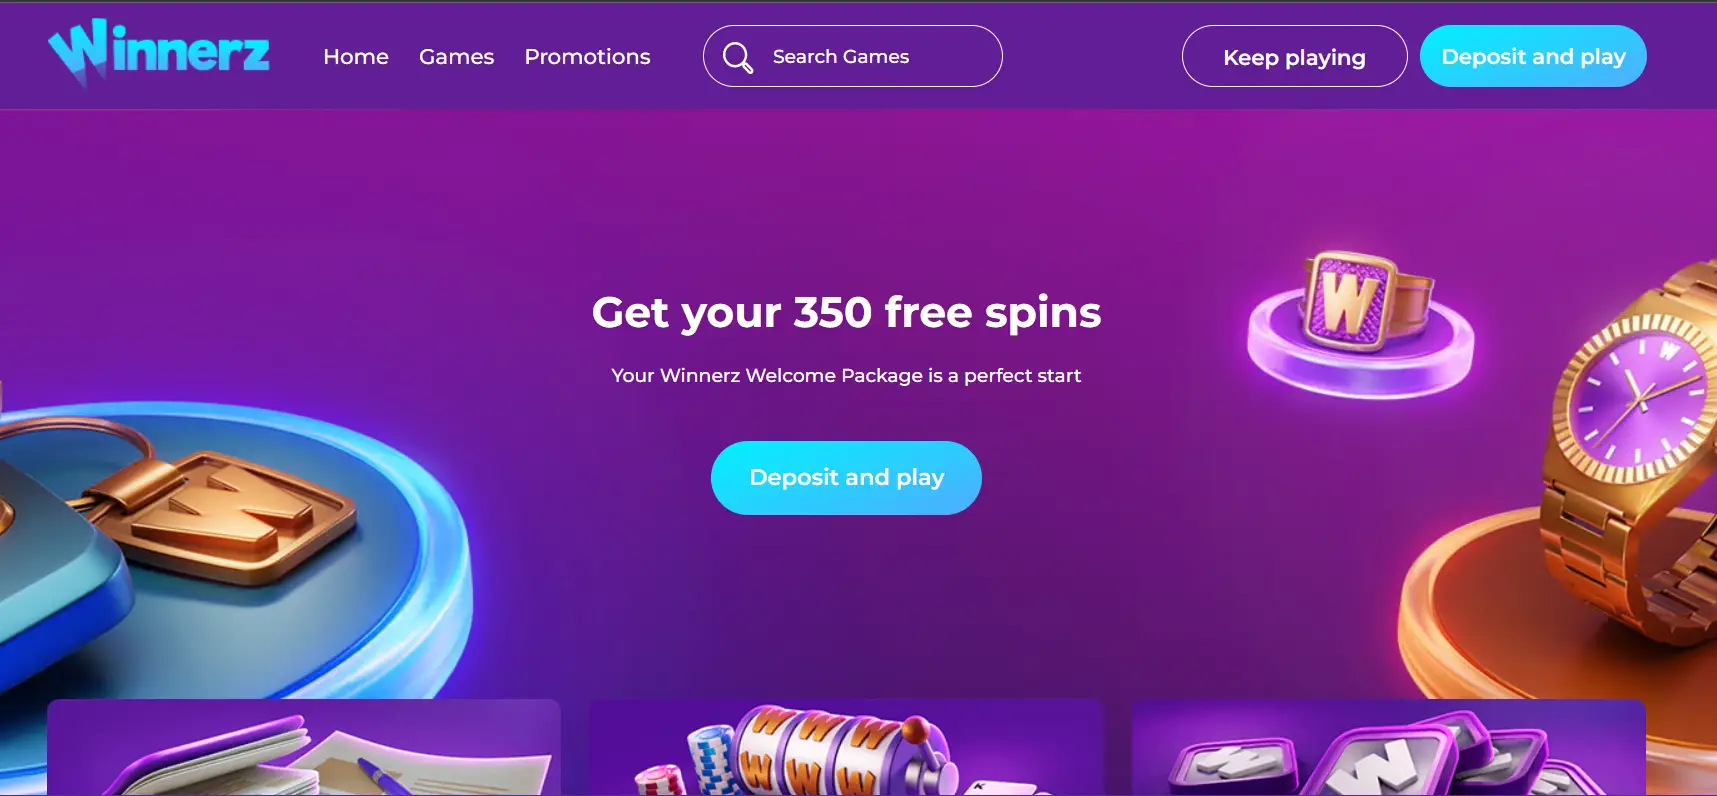 Winnerz Casino – Create new account to get 350 free spins